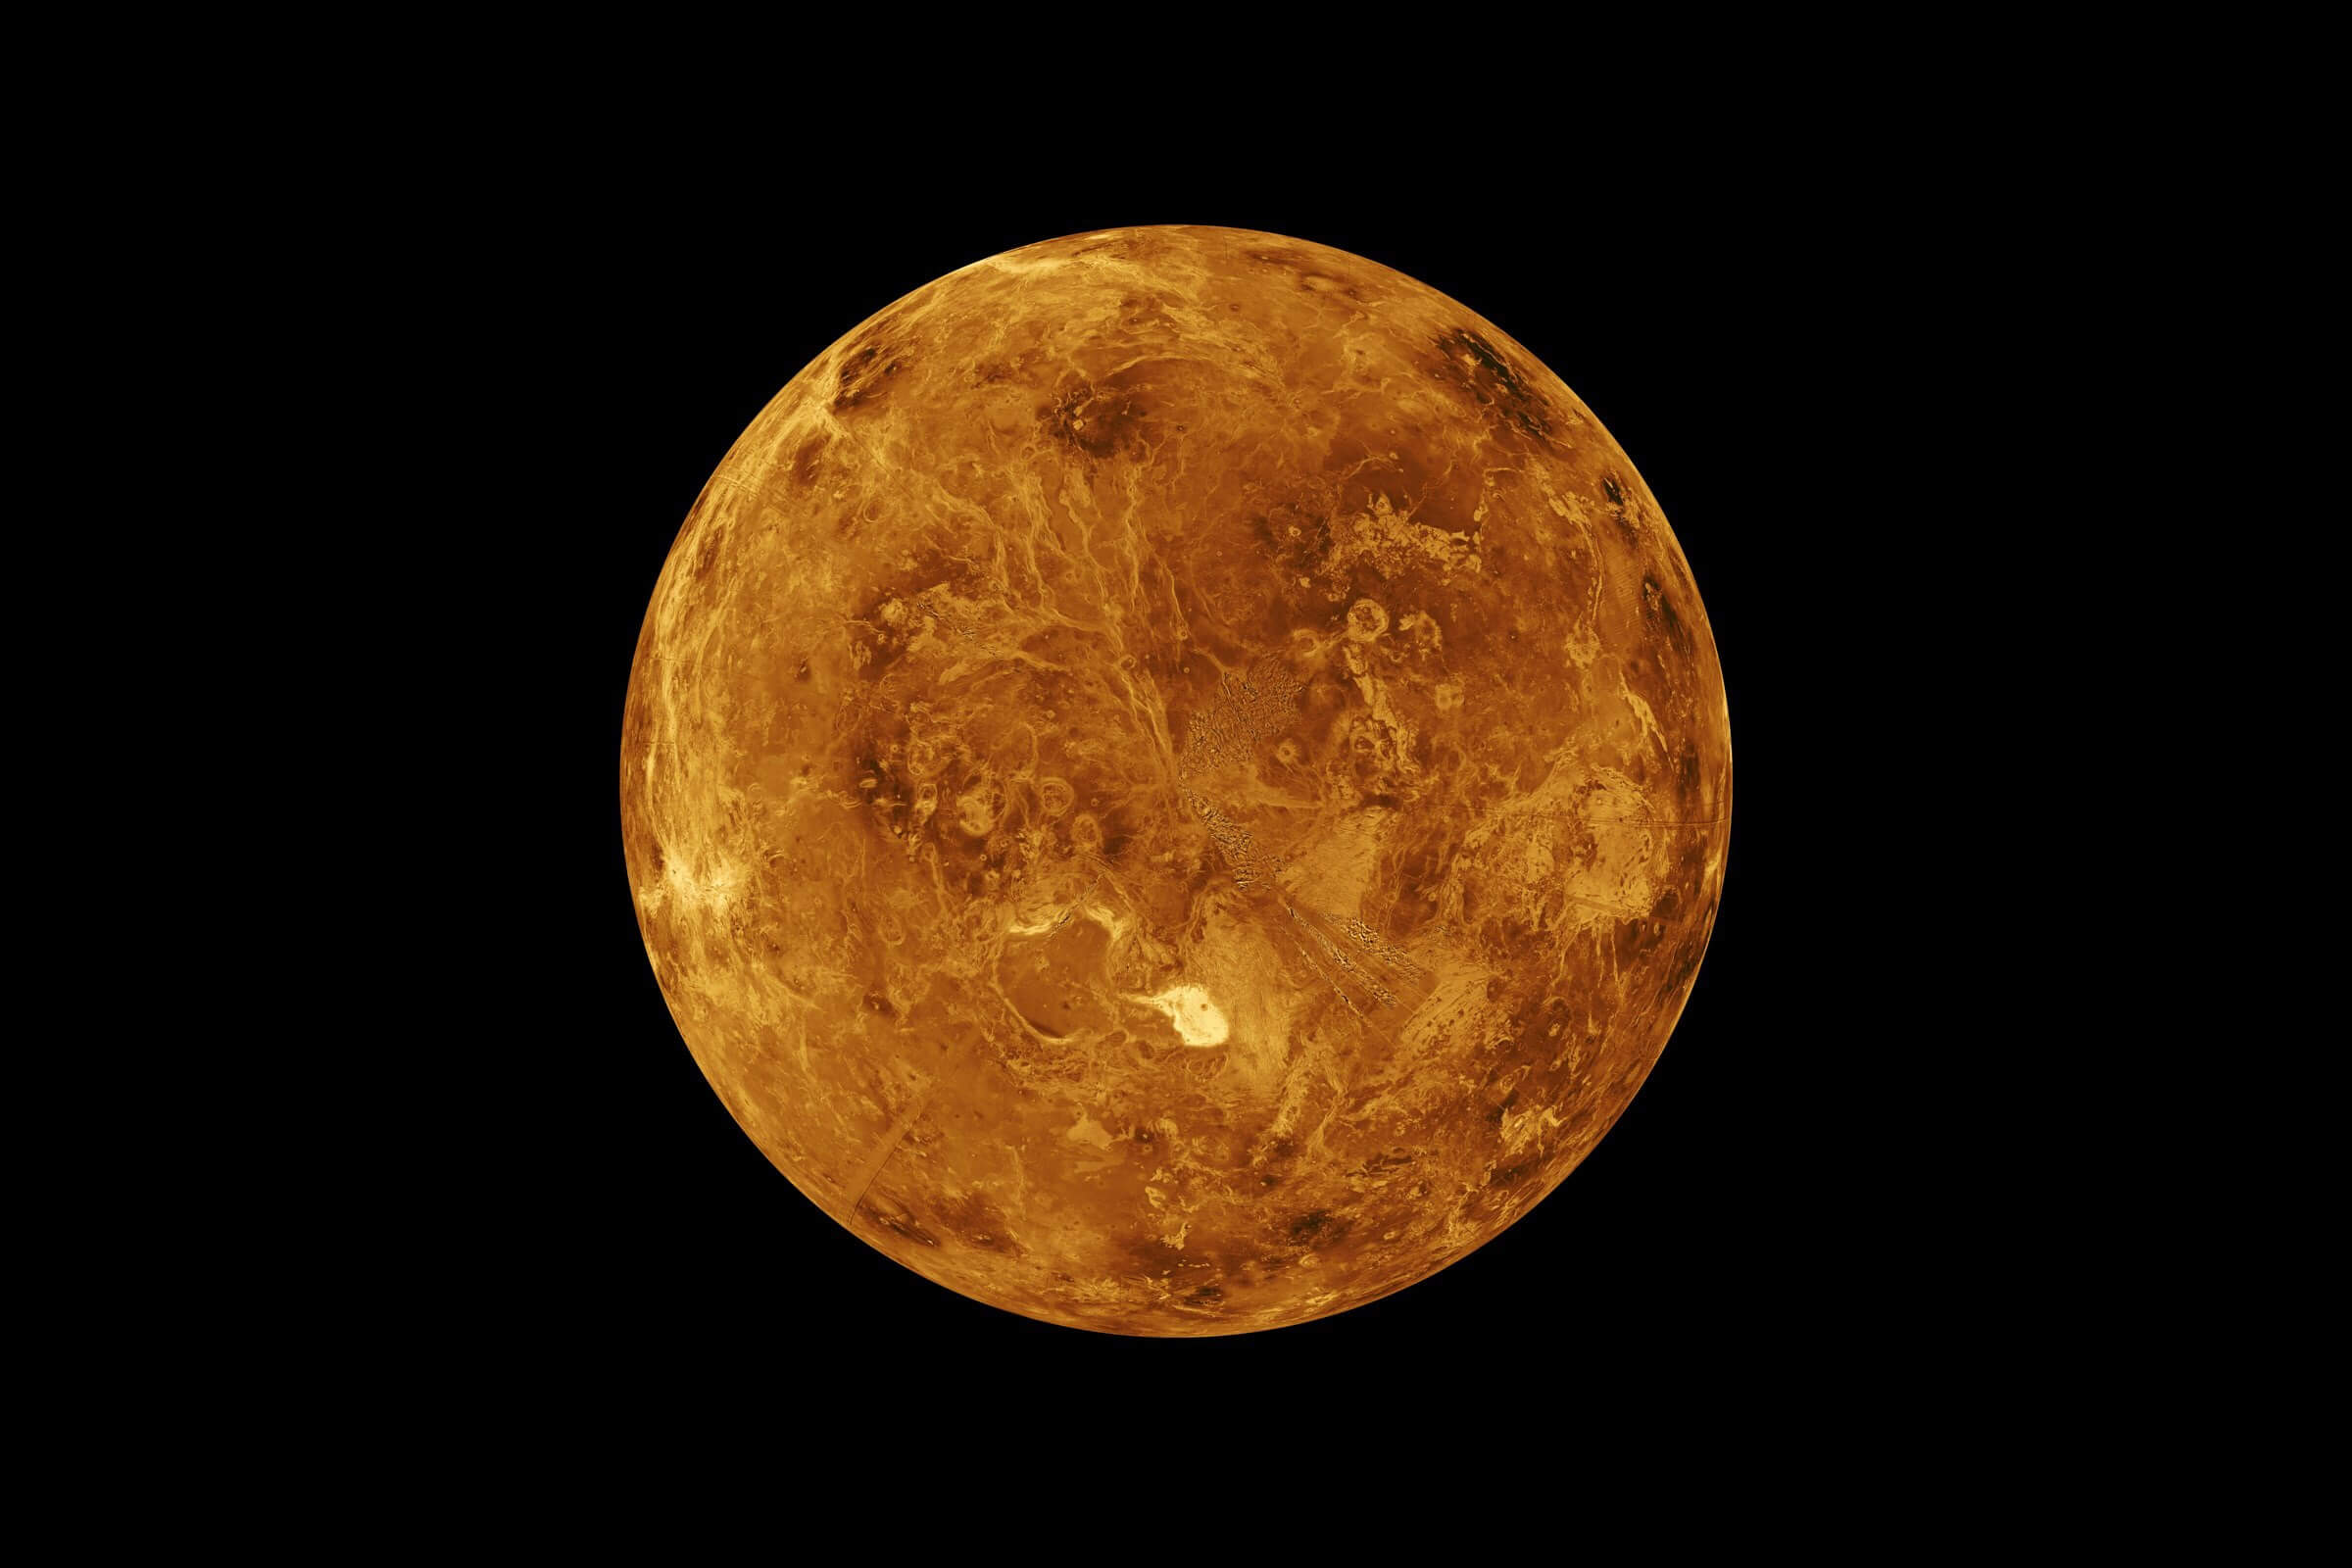 Nasa will send spacecraft to explore the hellish surface of Venus